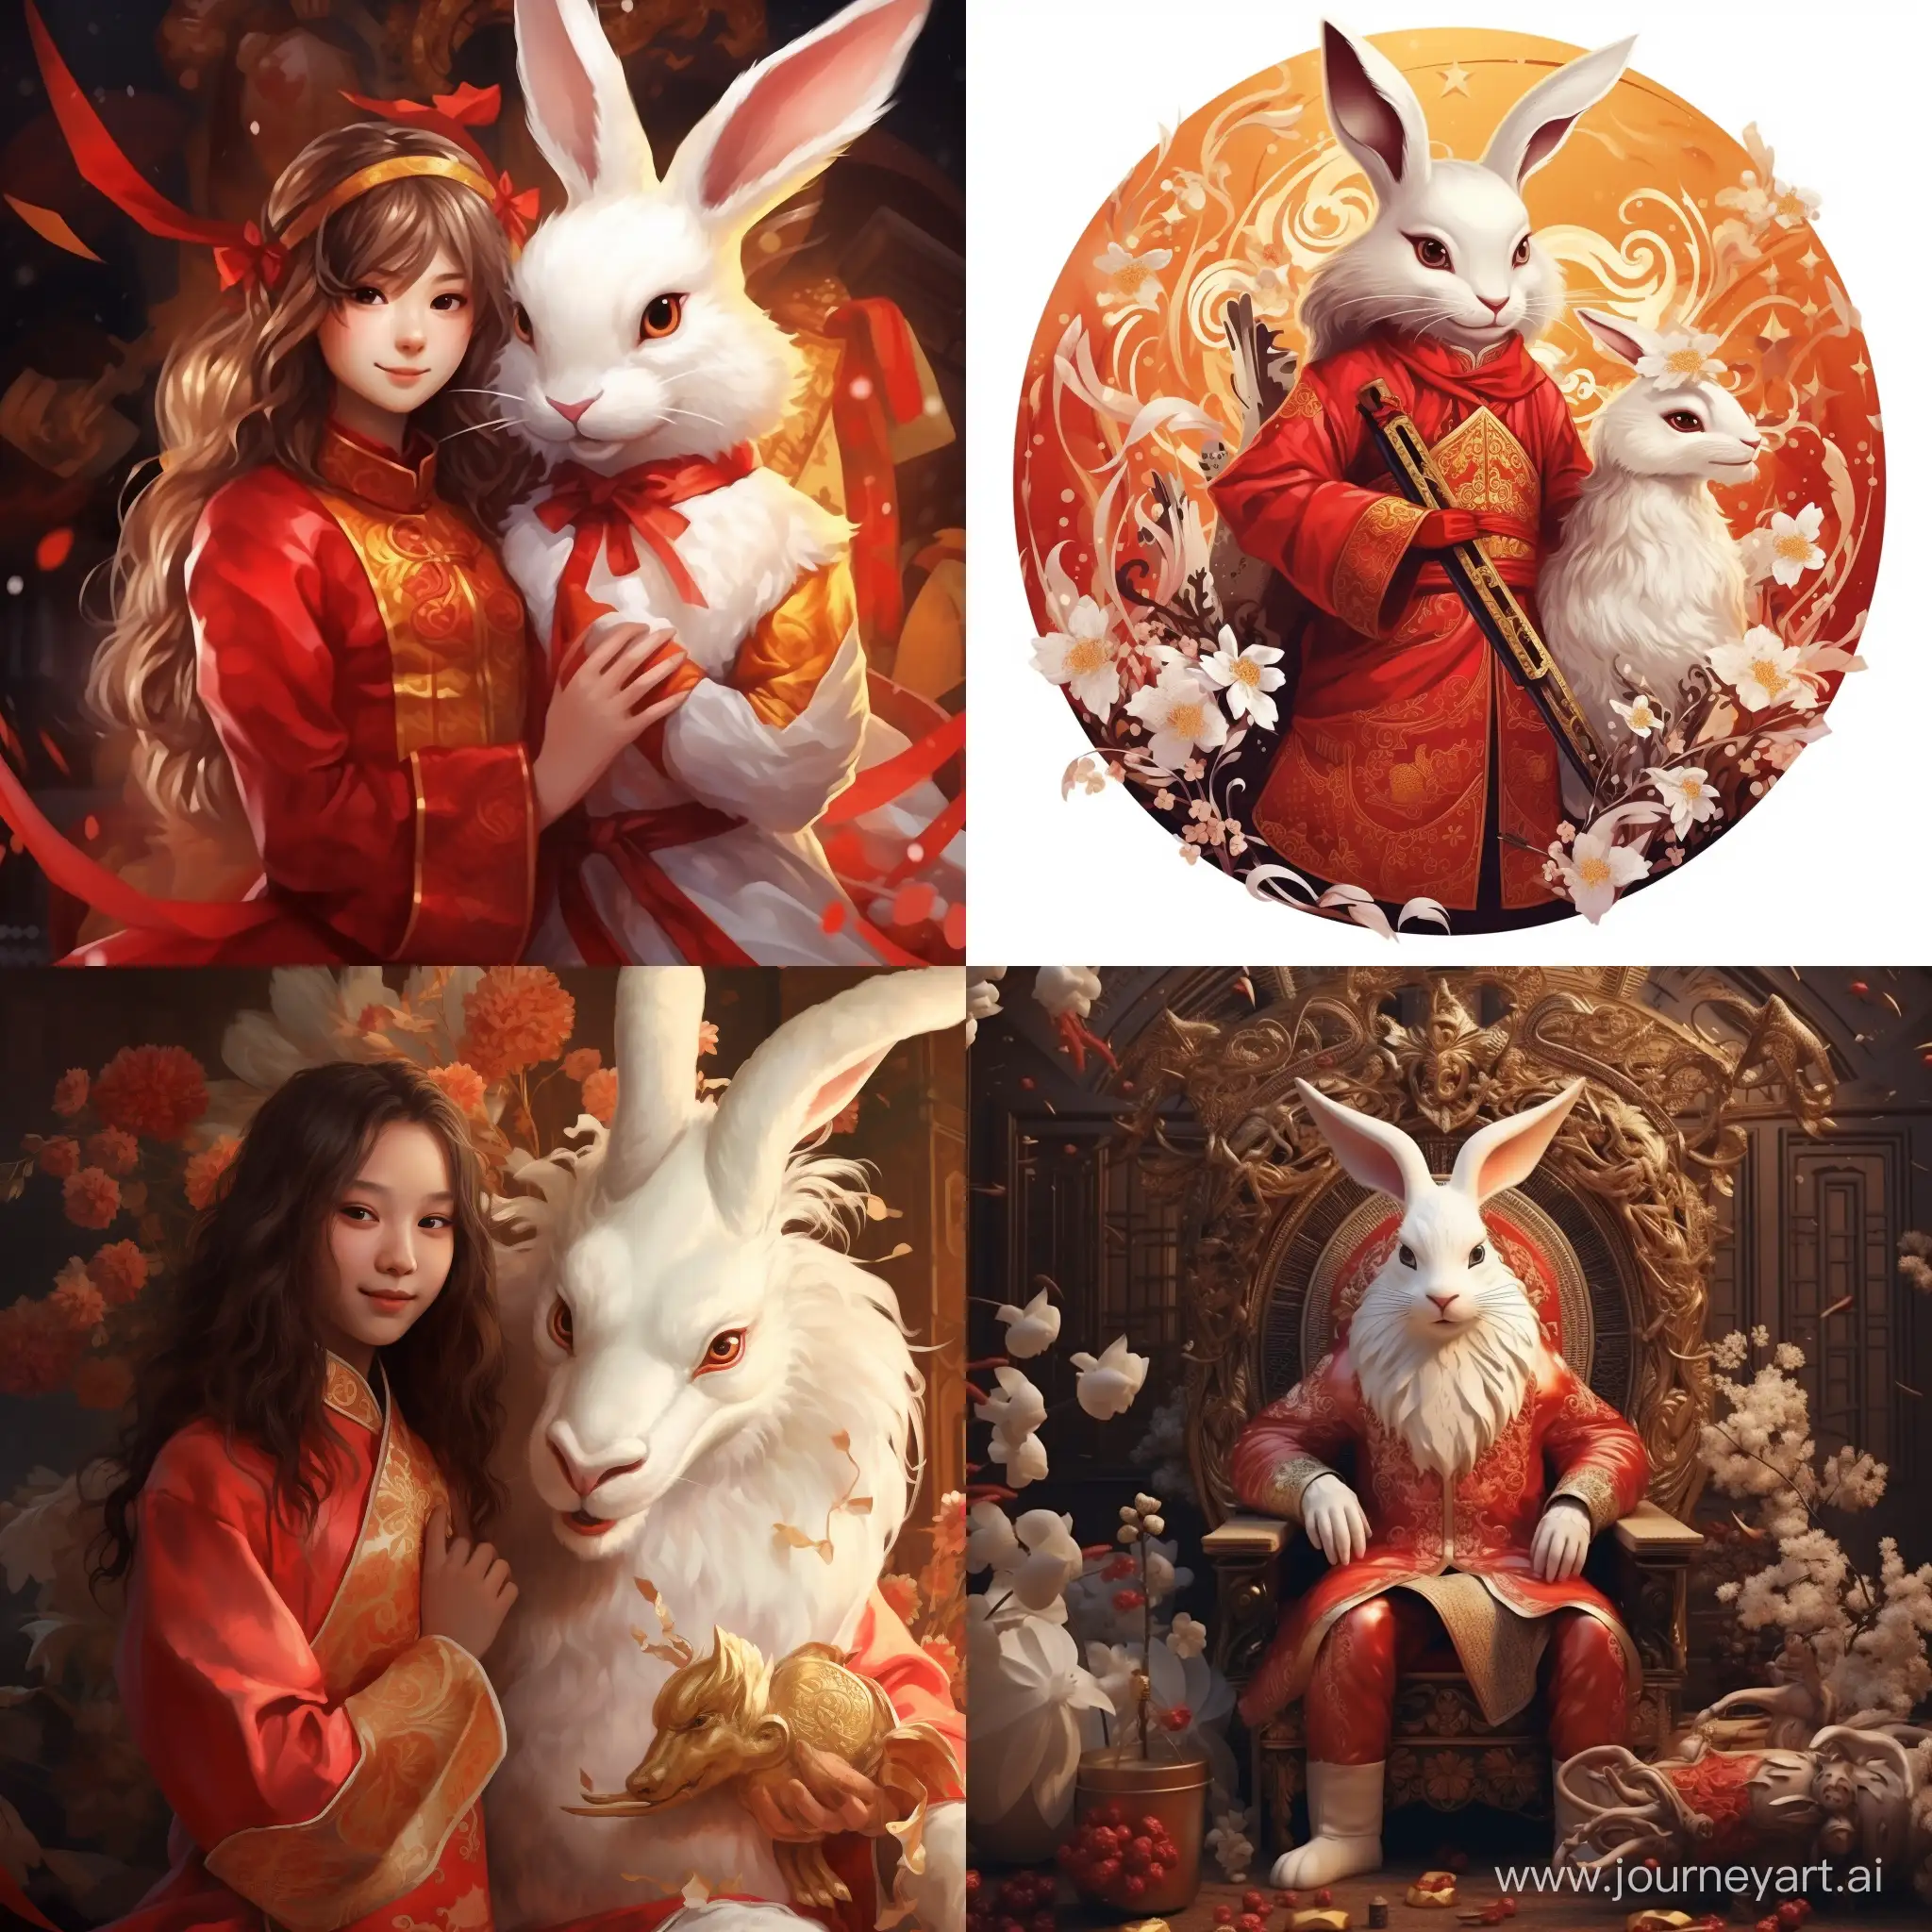 Golden-Dragon-Embracing-White-Rabbit-in-Festive-New-Year-Scene